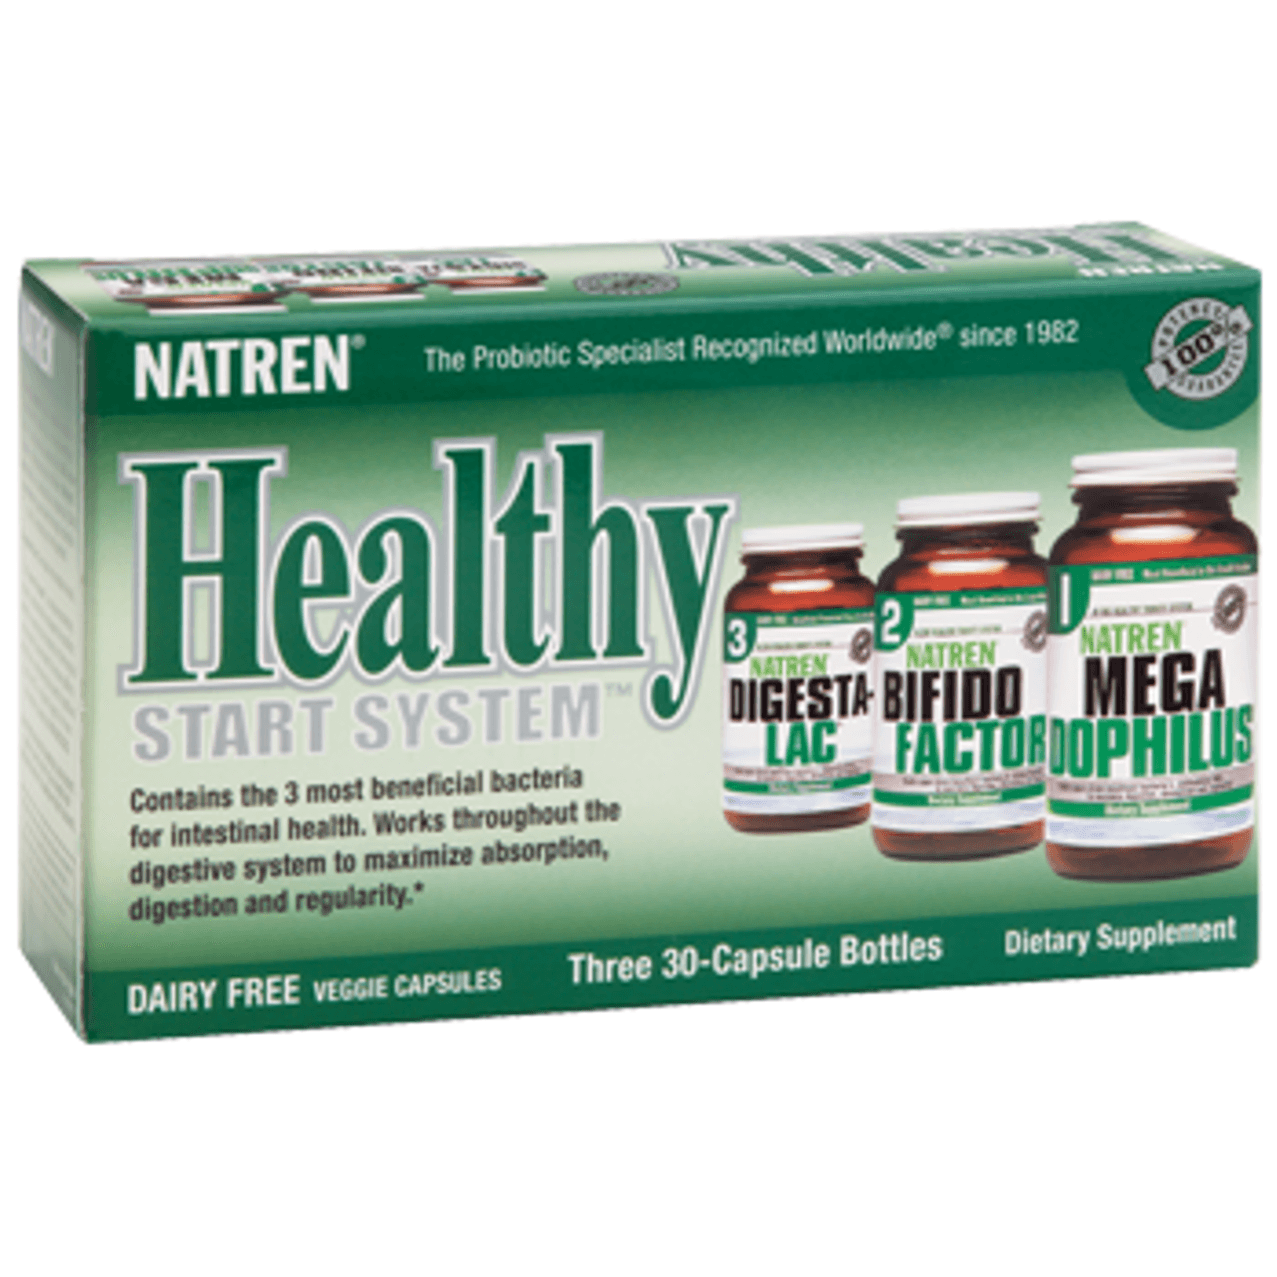 Natren Healthy Start System Dairy Free 3 Bottles of 30/60 Caps Supplements - Probiotics at Village Vitamin Store